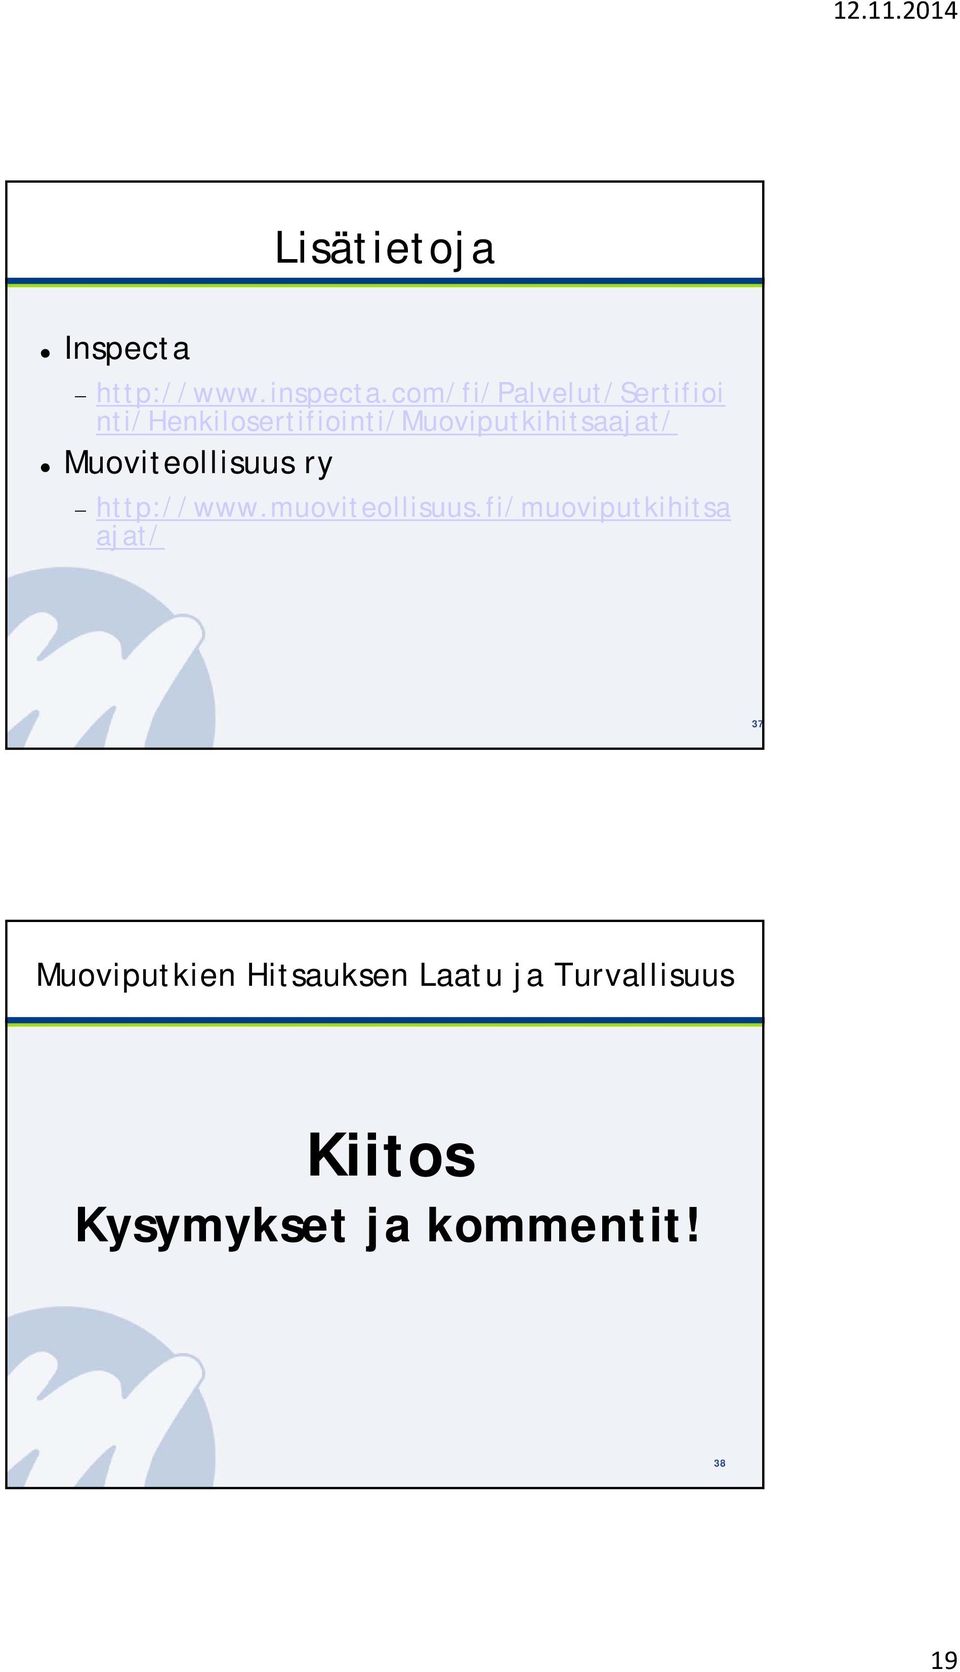 nti/henkilosertifiointi/muoviputkihitsaajat/ Muoviteollisuus ry